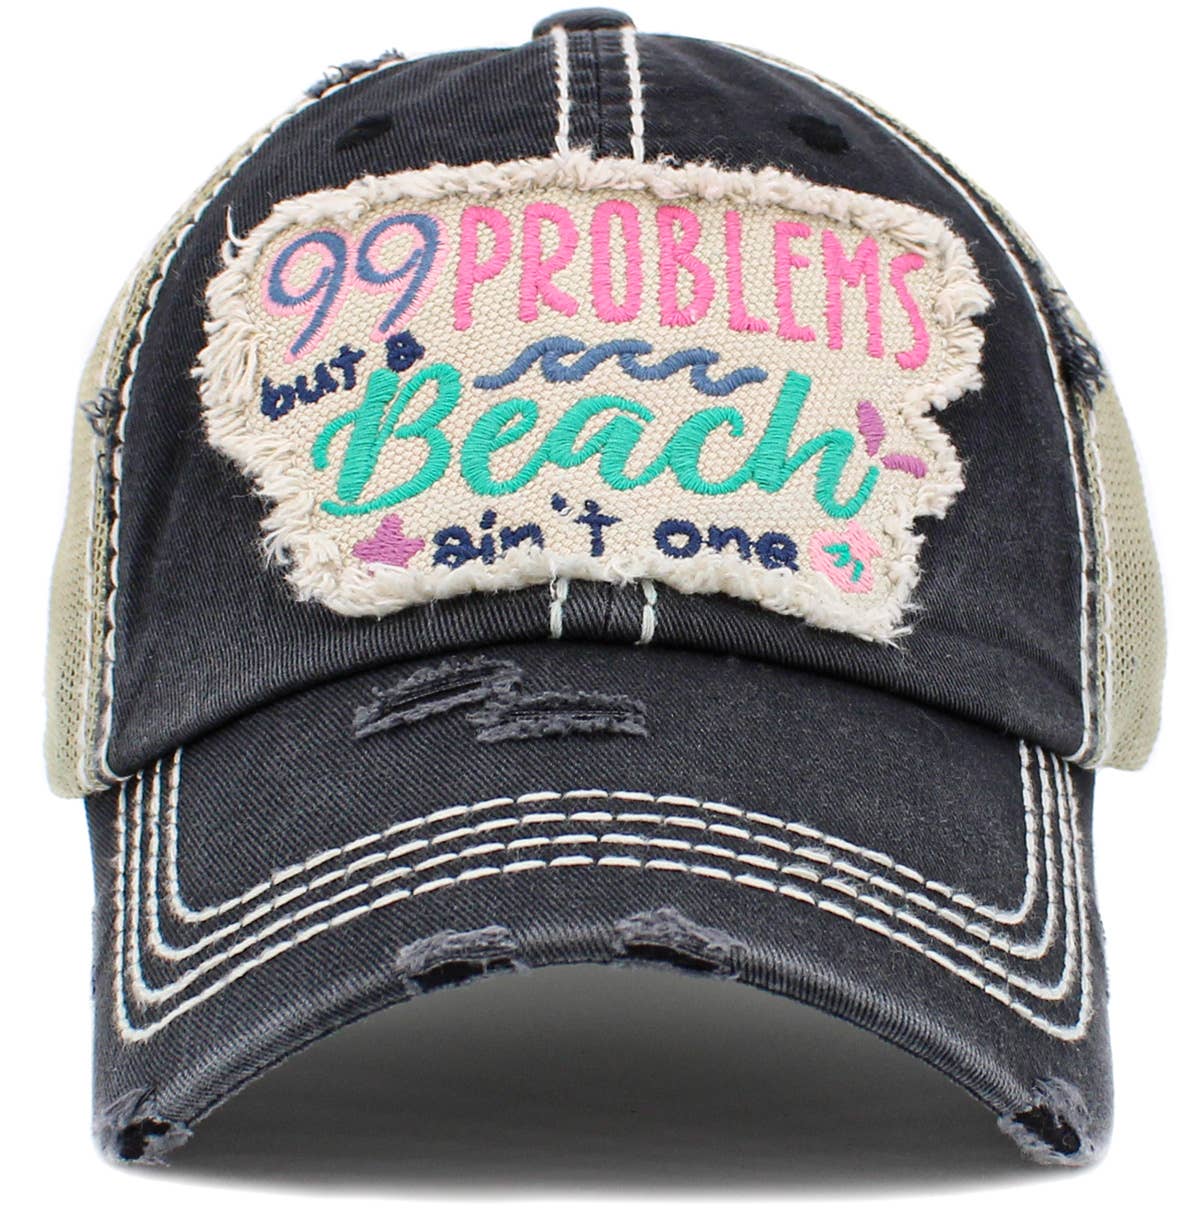 99 Problems But A Beach Ain't One Vintage Ballcap